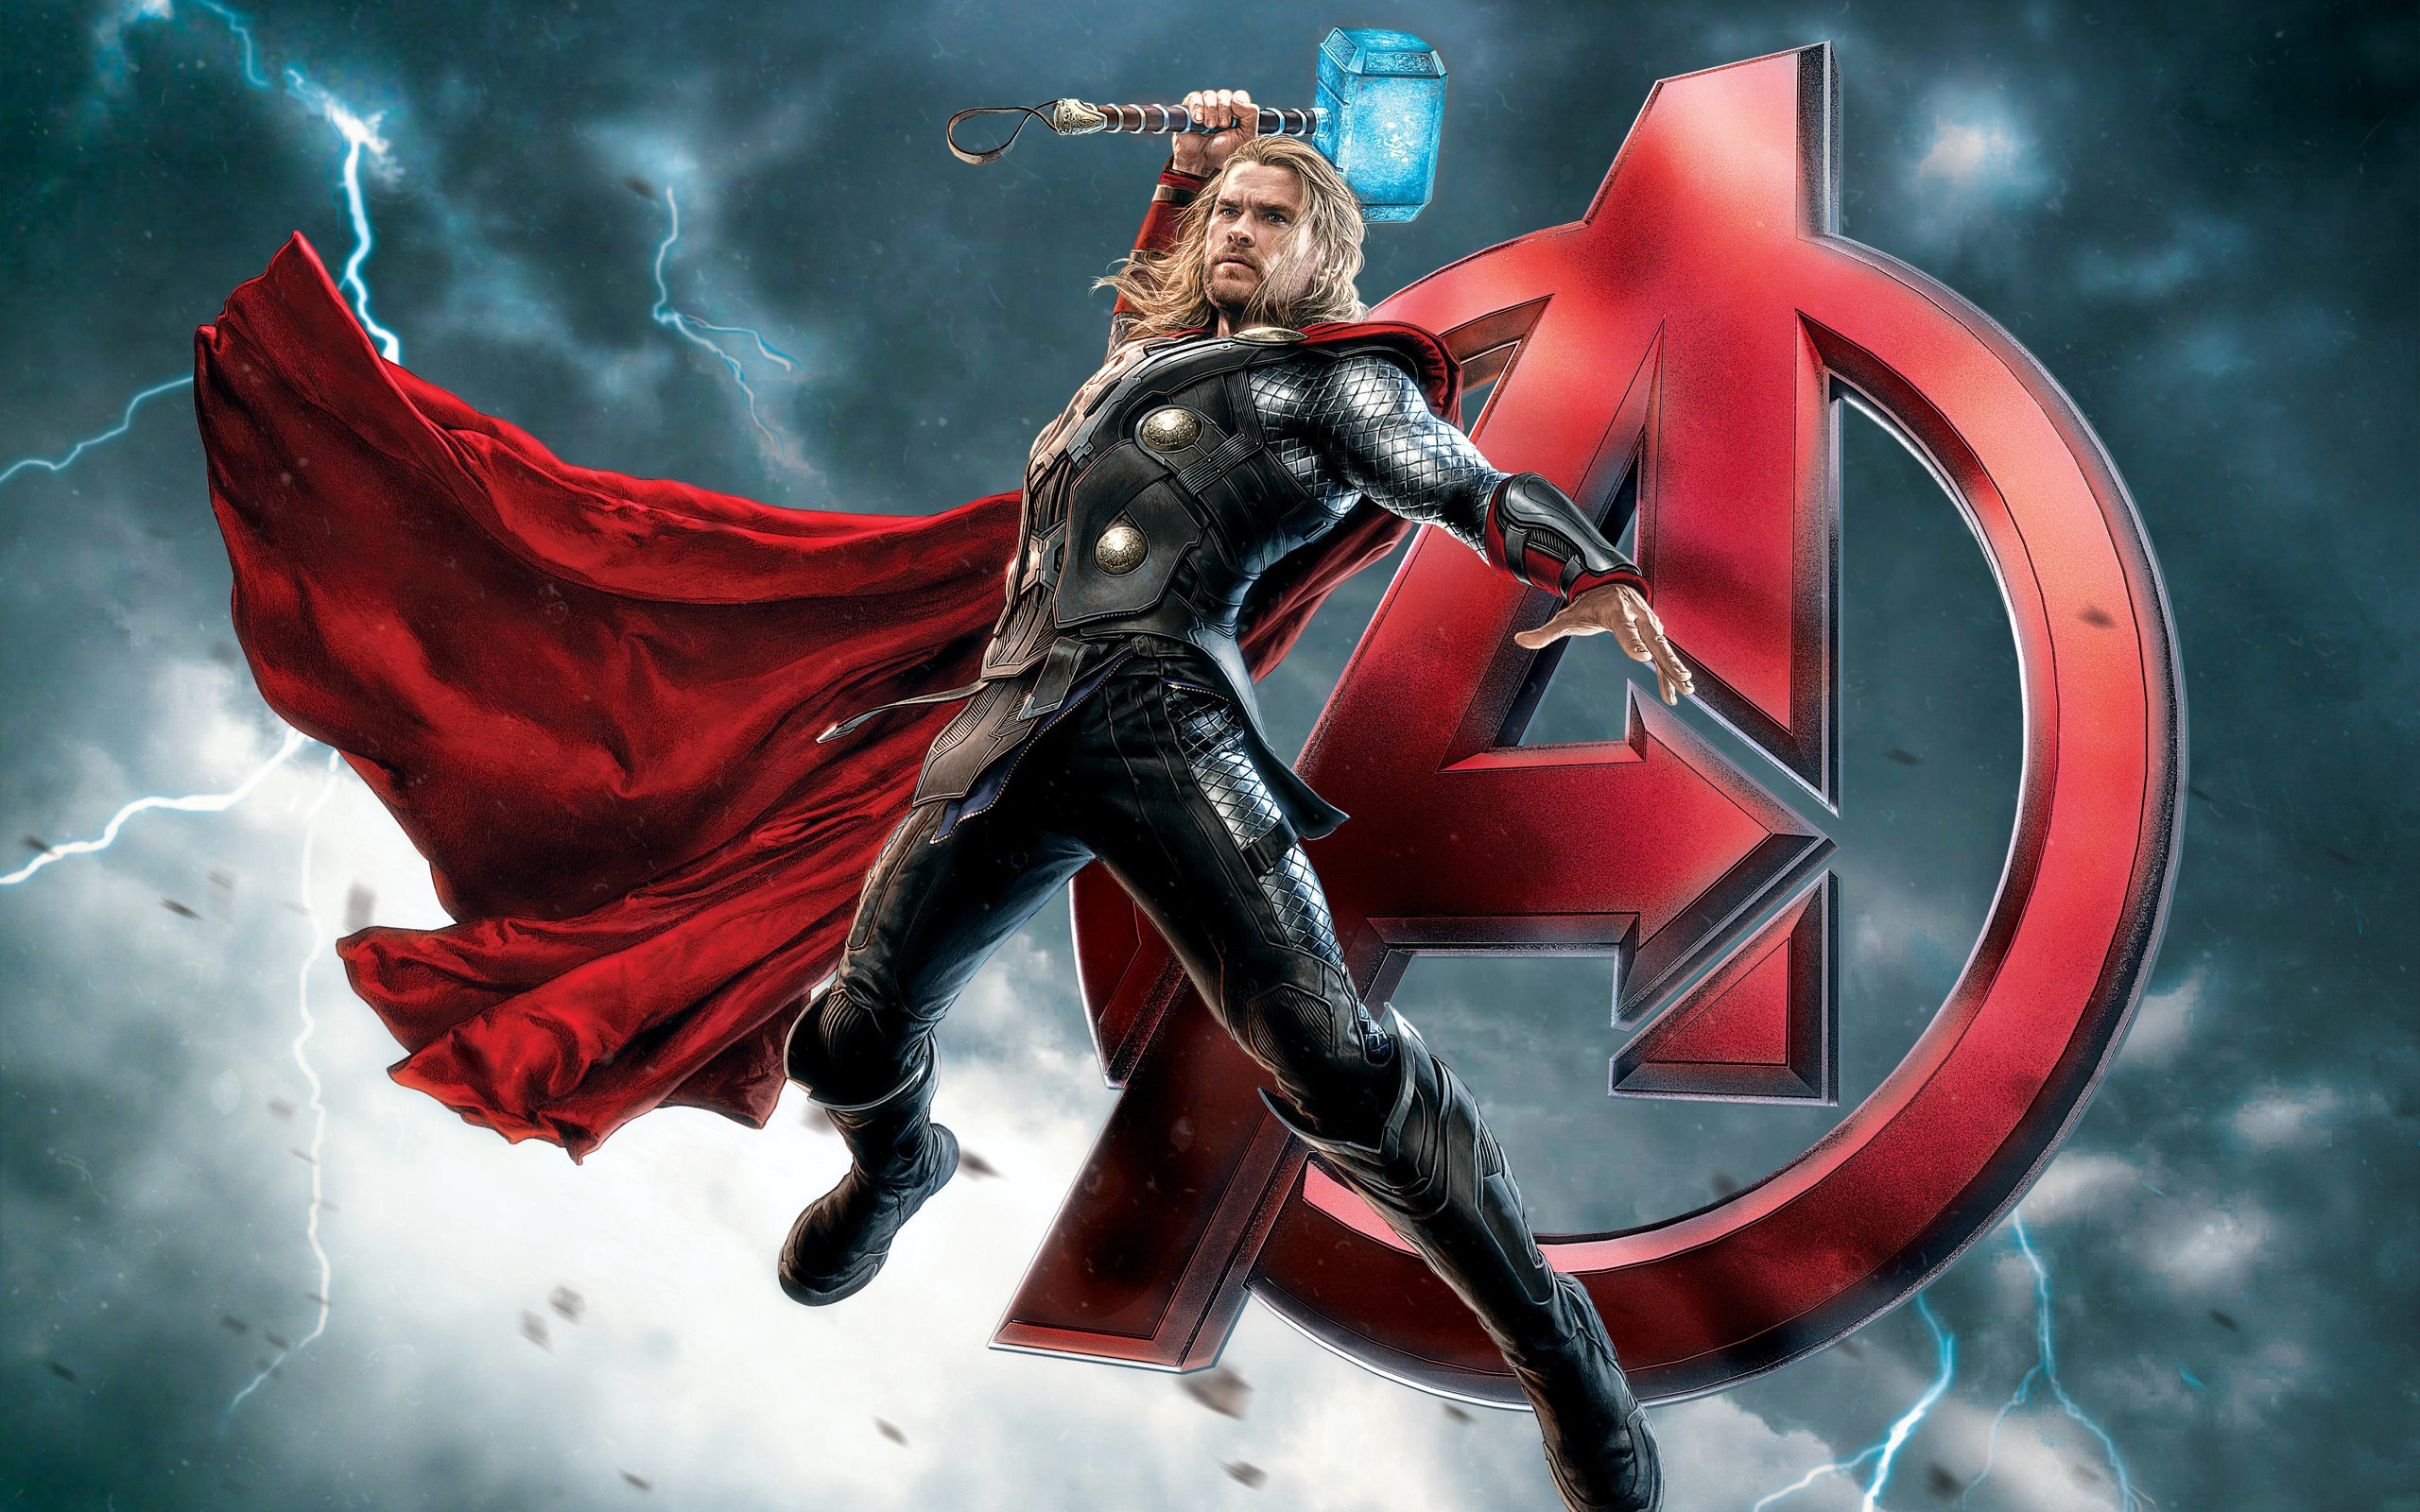 General 2560x1600 Thor Thor 2: The Dark World Thor : Ragnarok Avengers Endgame Avengers: Infinity war Avengers: Age of Ultron science fiction movie characters Mjolnir lightning